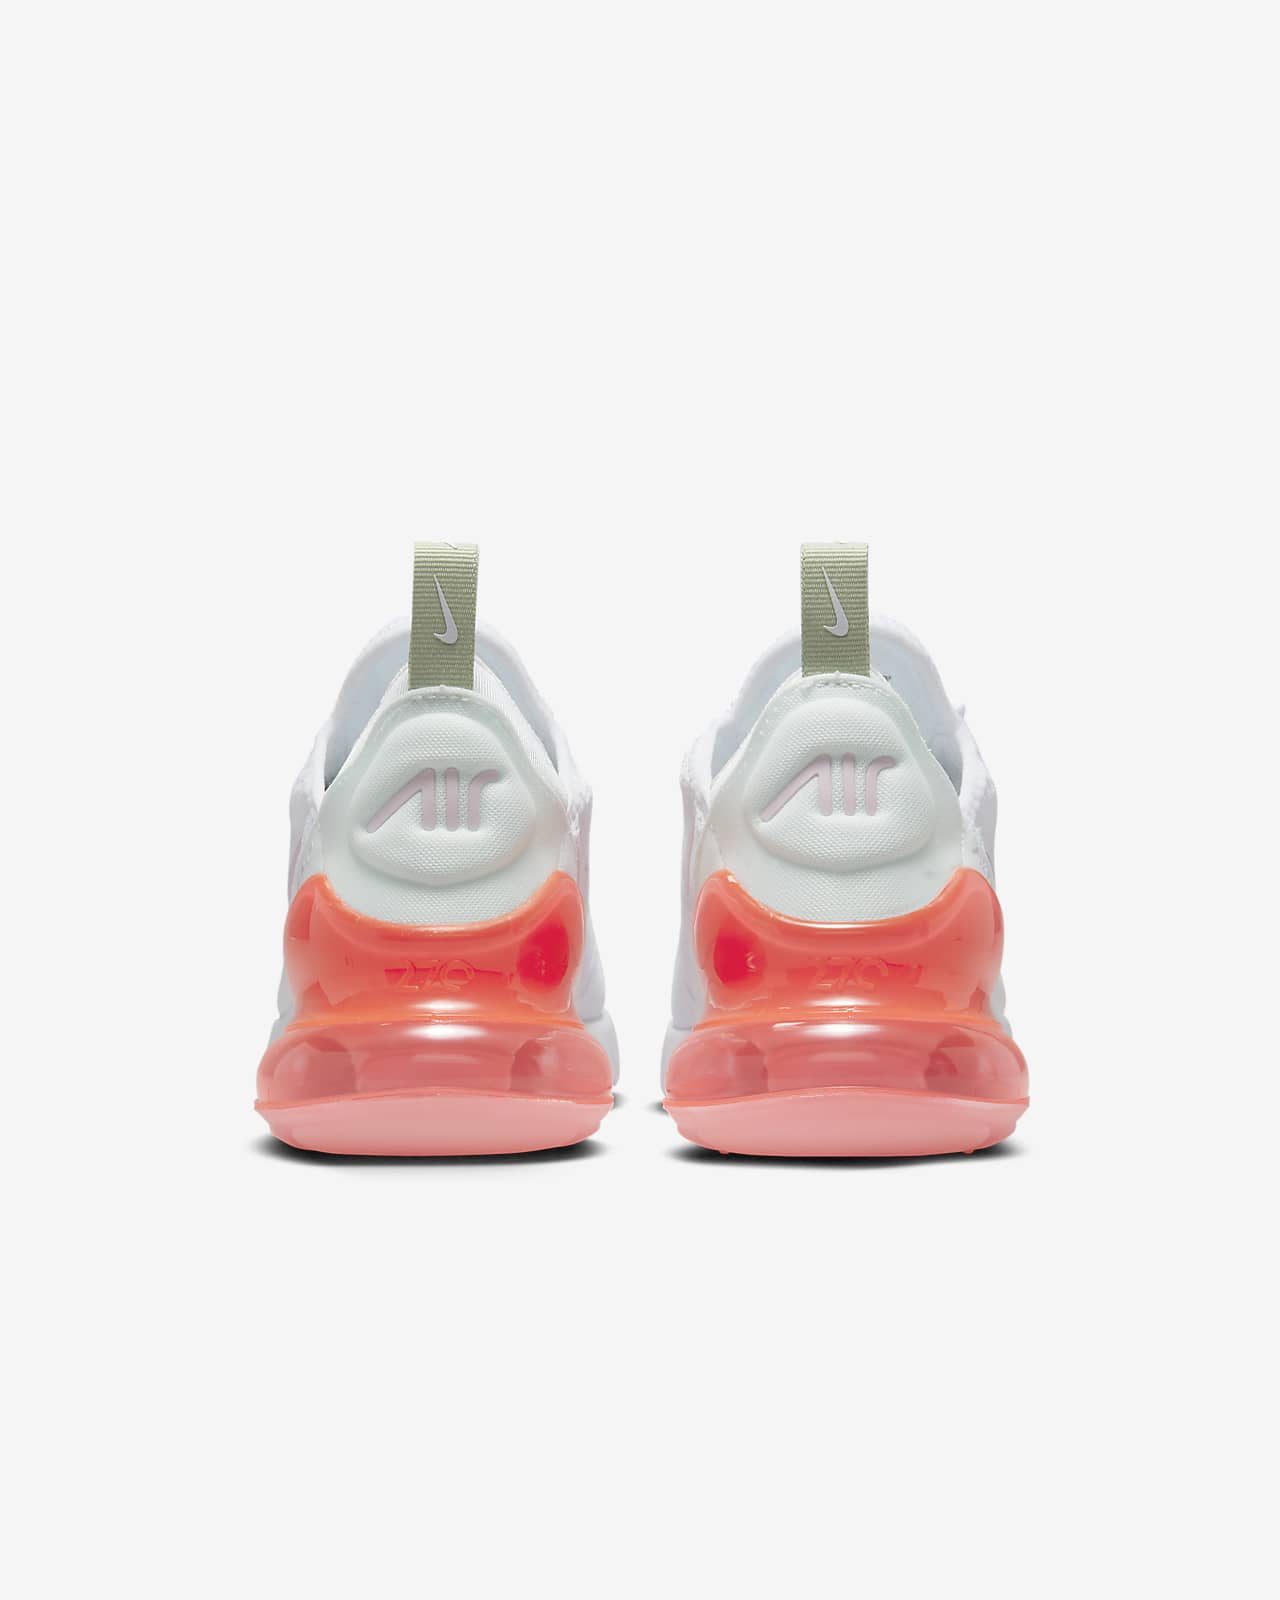 Nike Air Max pink and white nike air max 270 Big Kids' Shoes